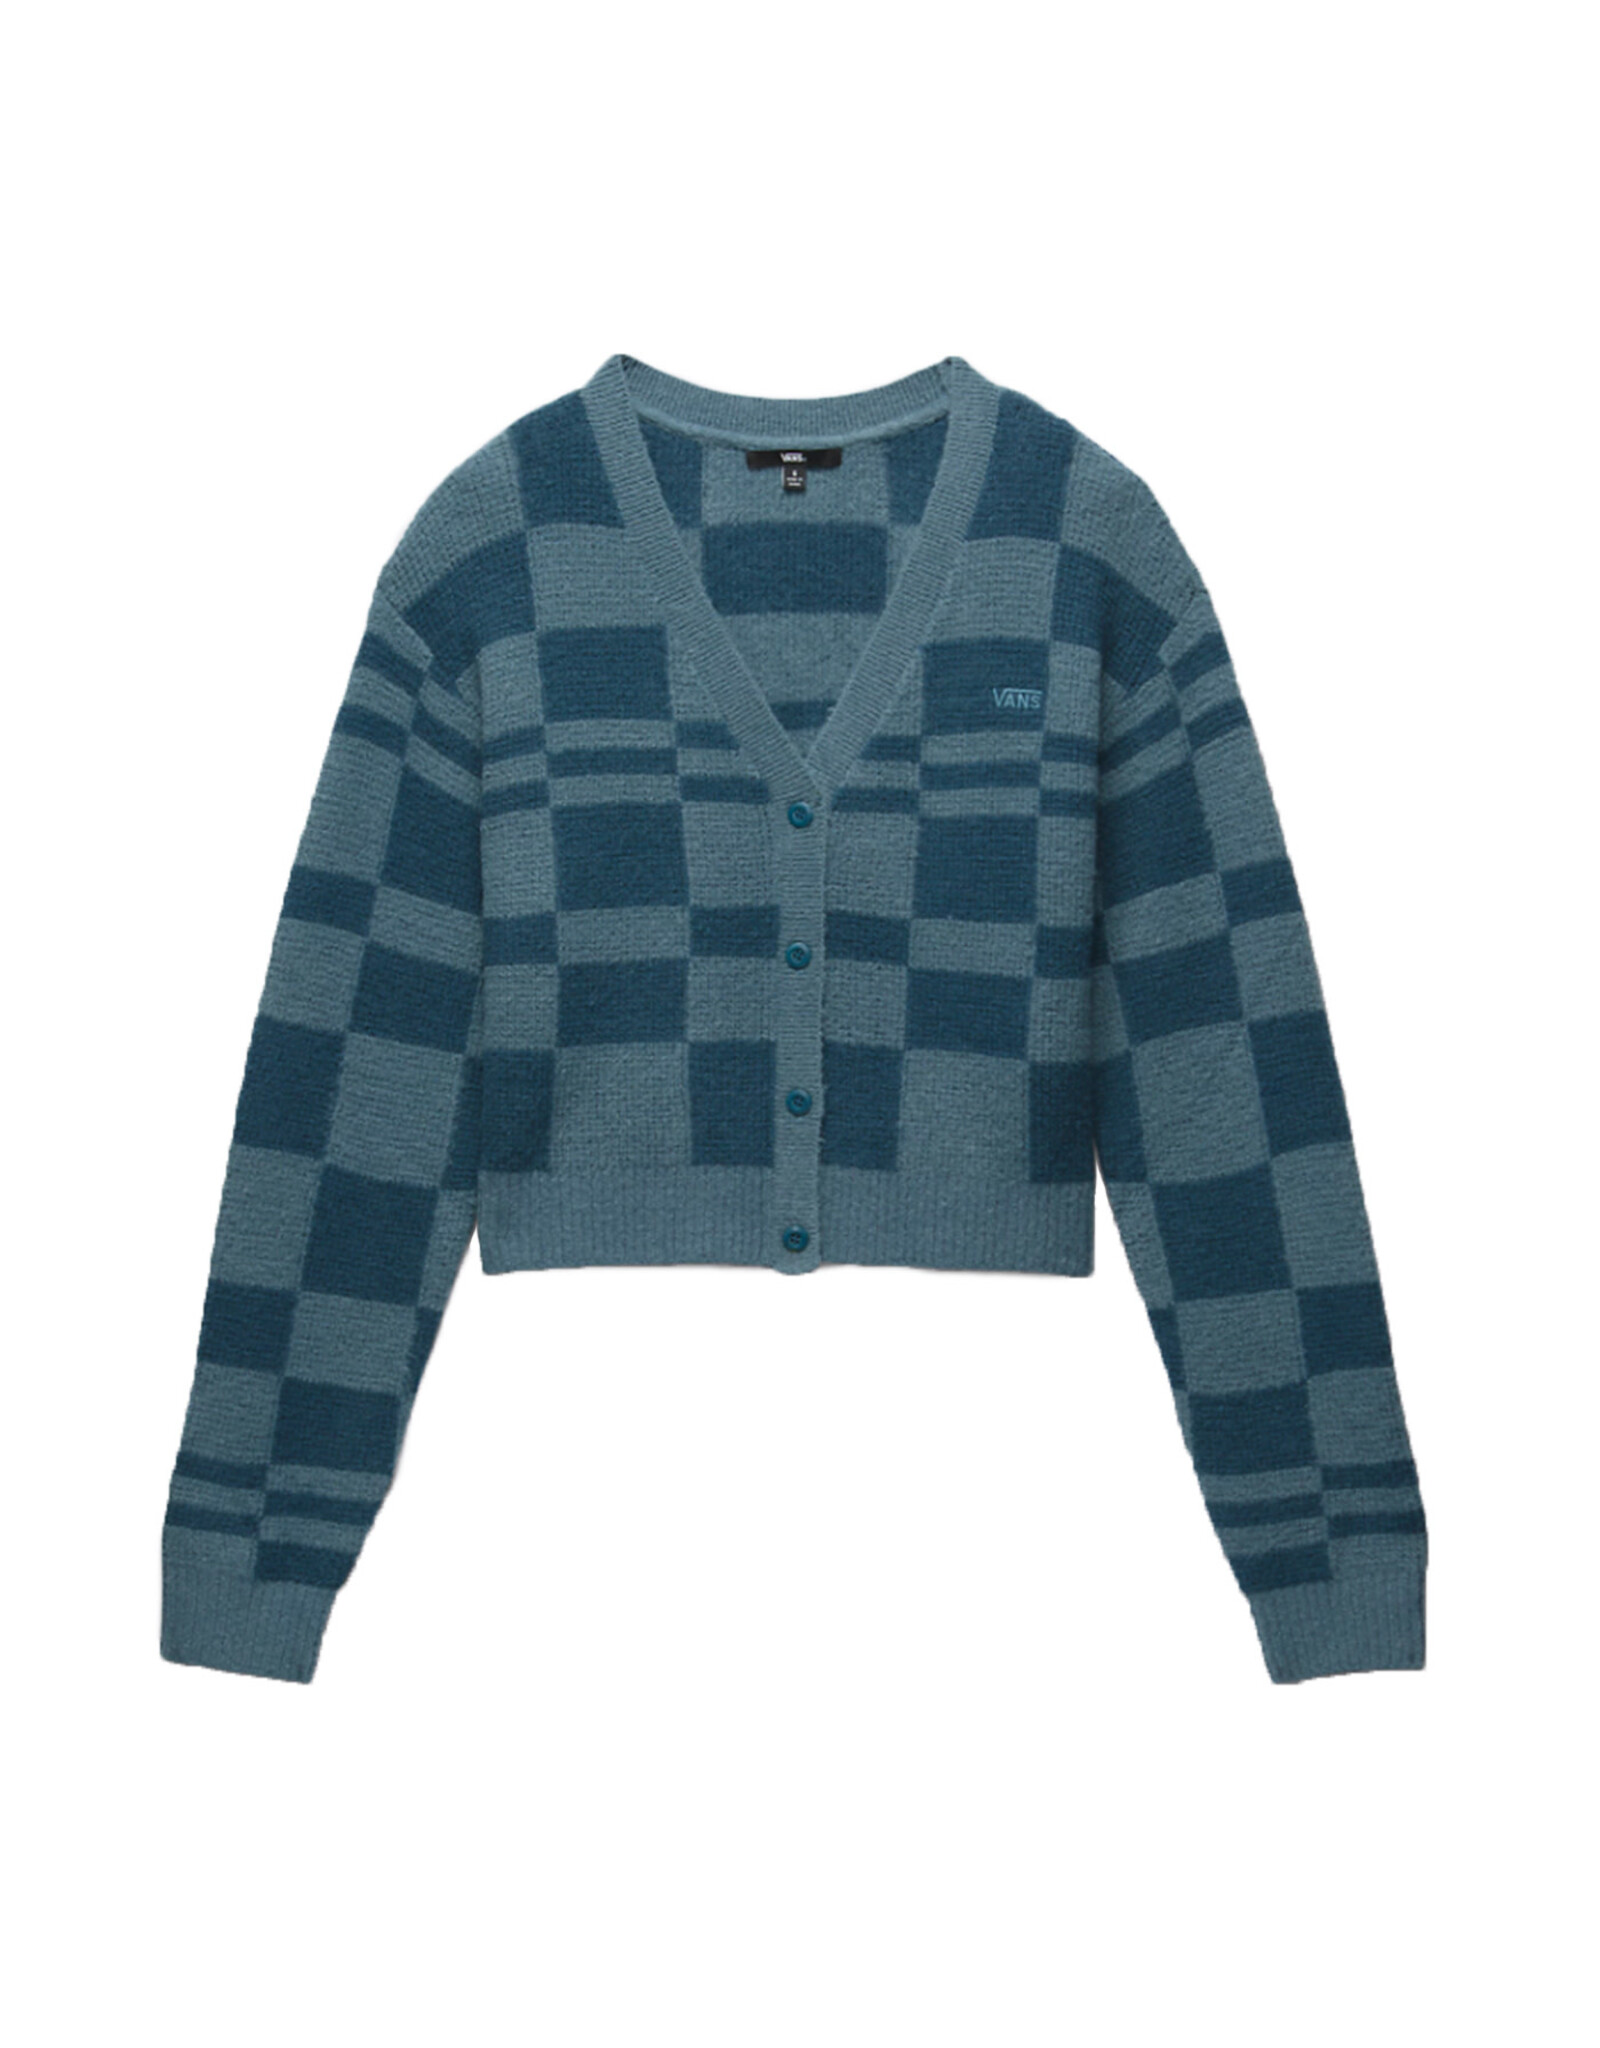 Vans Waffle Knit Relax Cardigan Sweater Vans teal - VN00074TBR4